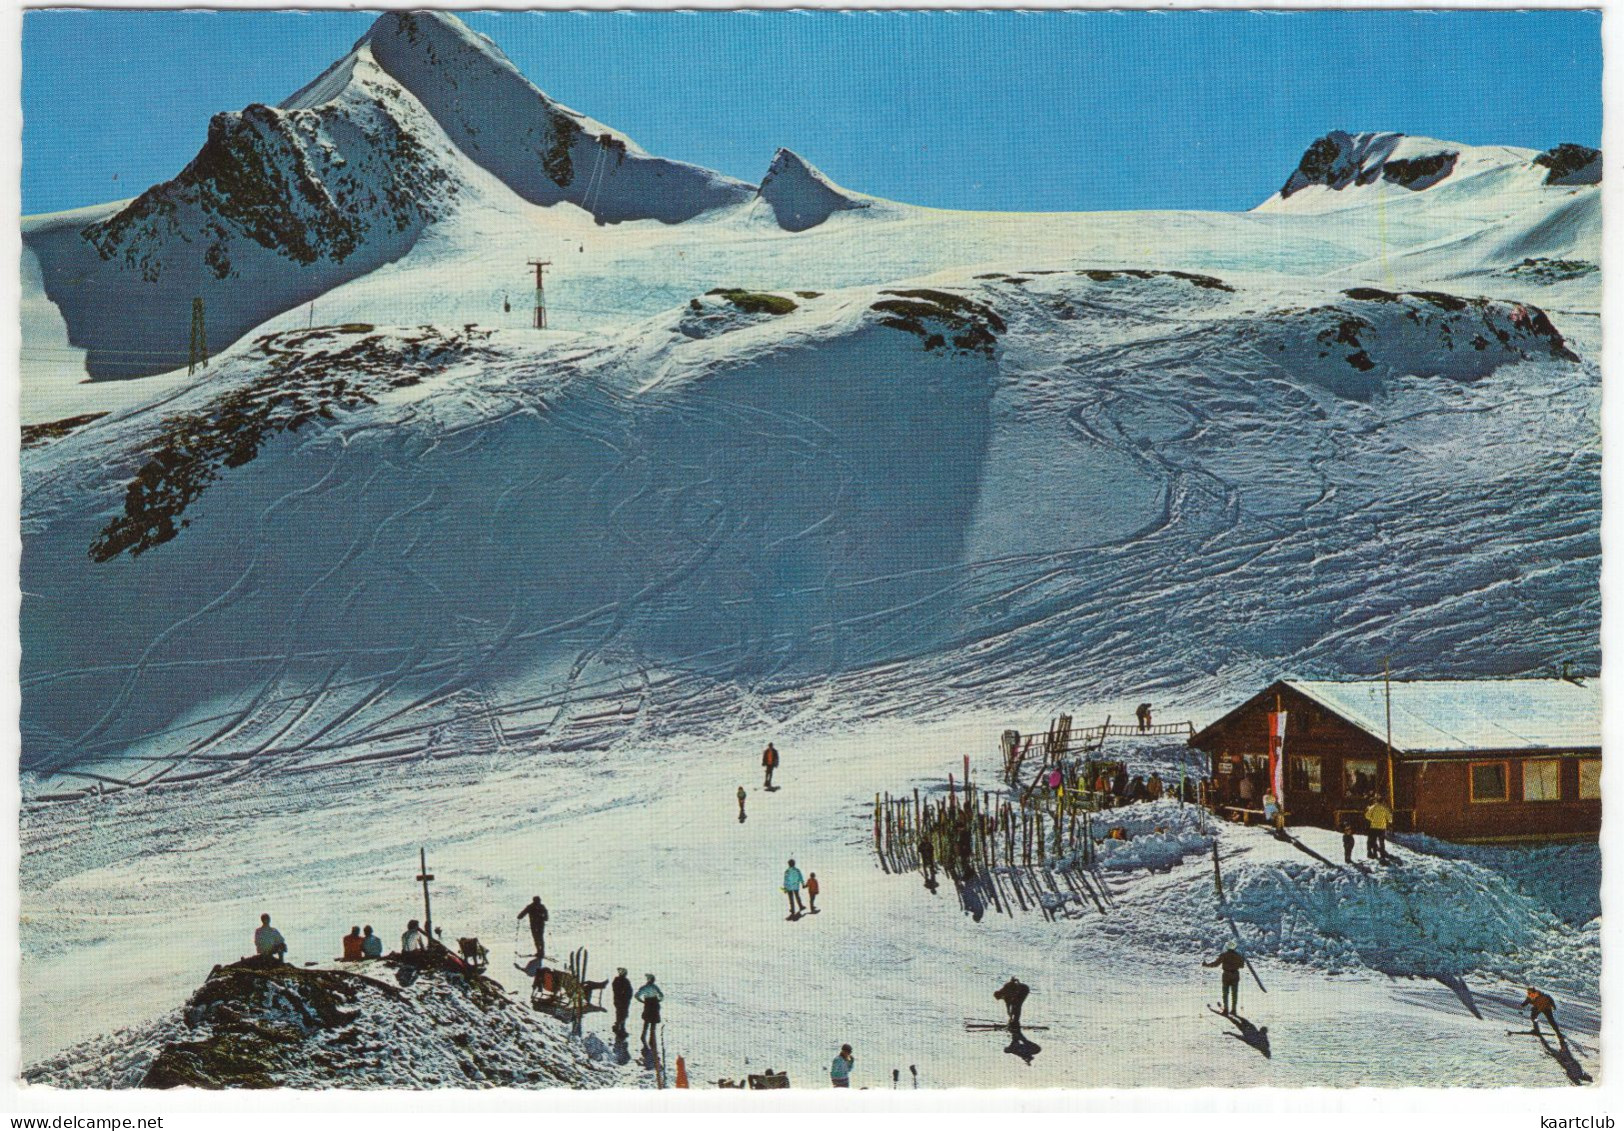 Gletscherbahnen Kaprun, 928--3029 M - Berghaus Gletscherbahn  - (Österreich/Austria) - Ski - Kaprun